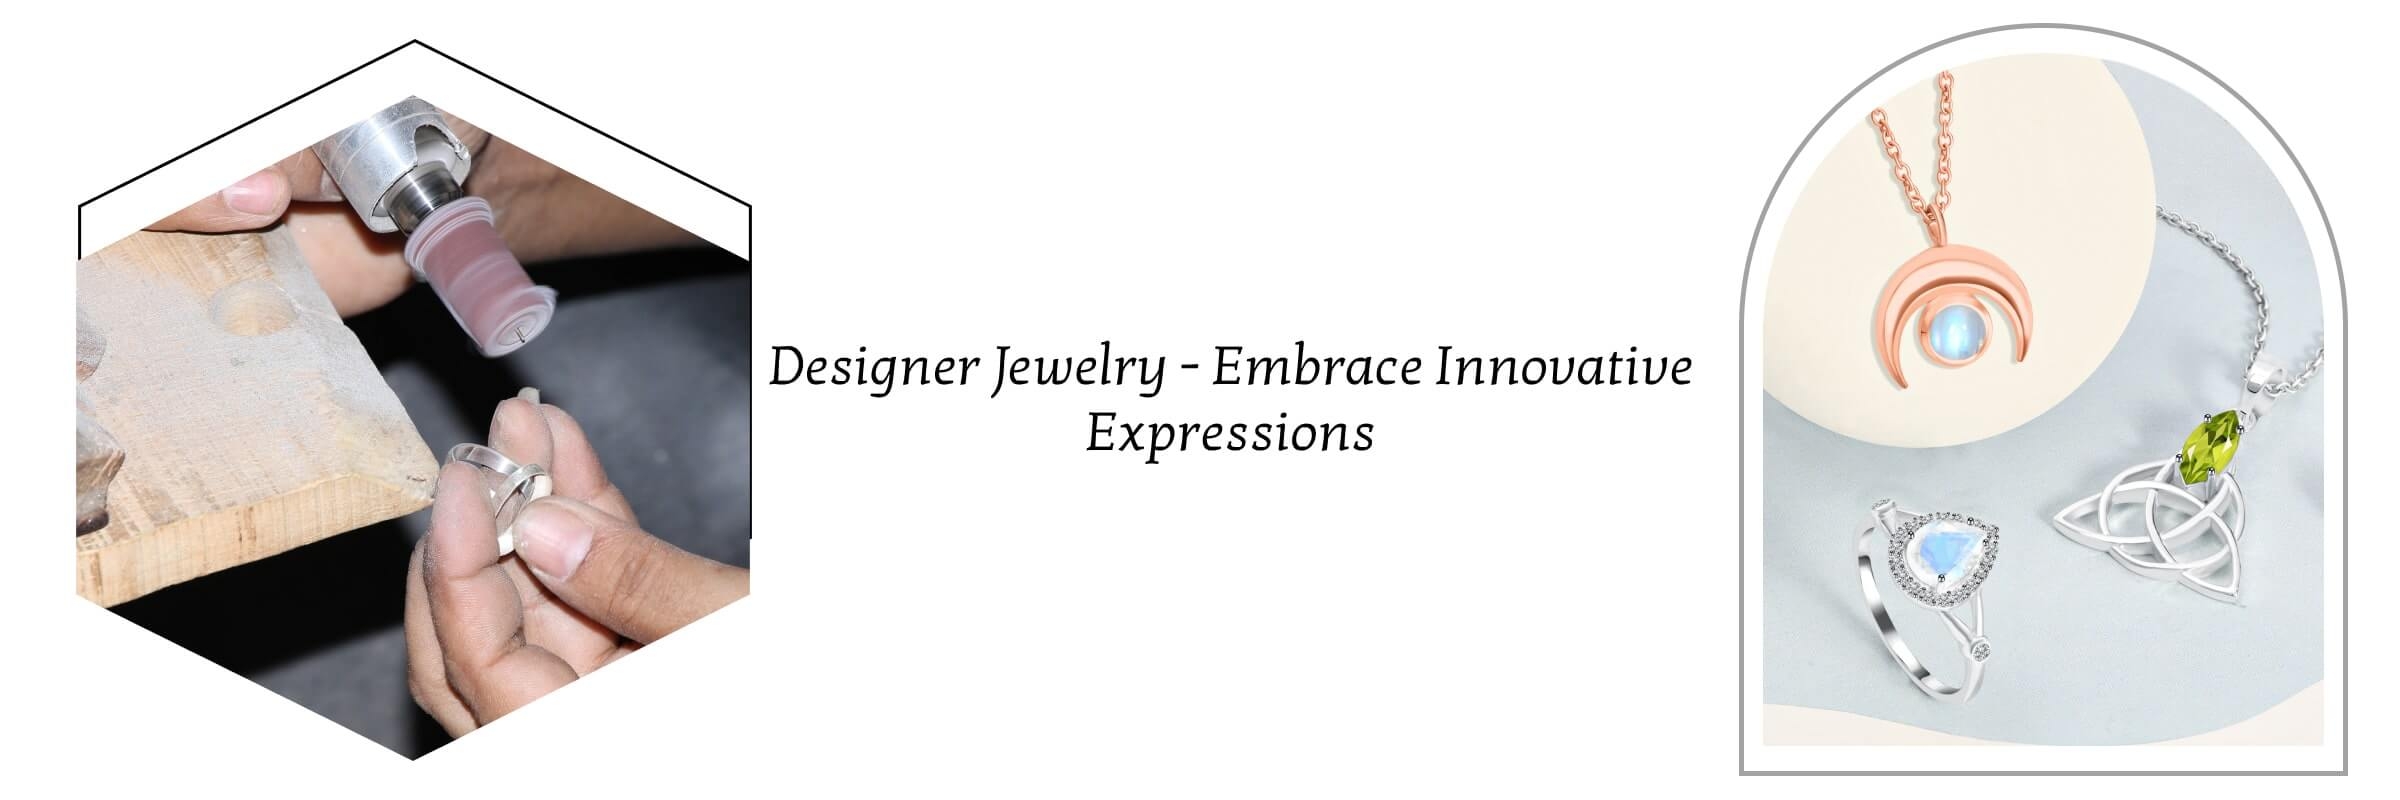 Innovative Designs for Designer Jewelry